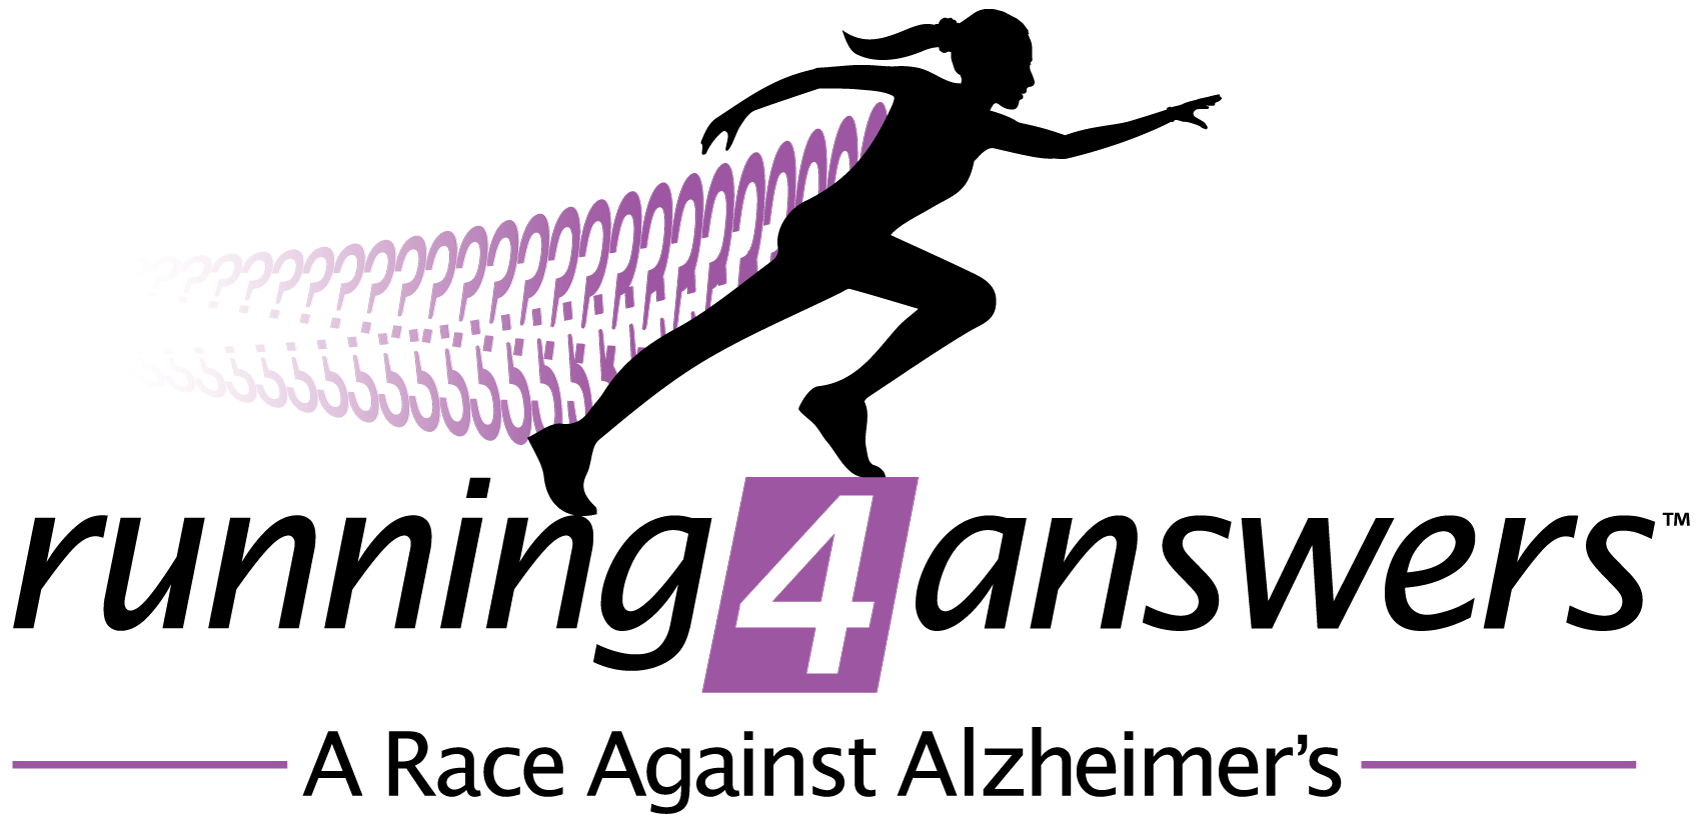 Running 4 Answers, a Race Against Alzheimer’s logo on RaceRaves